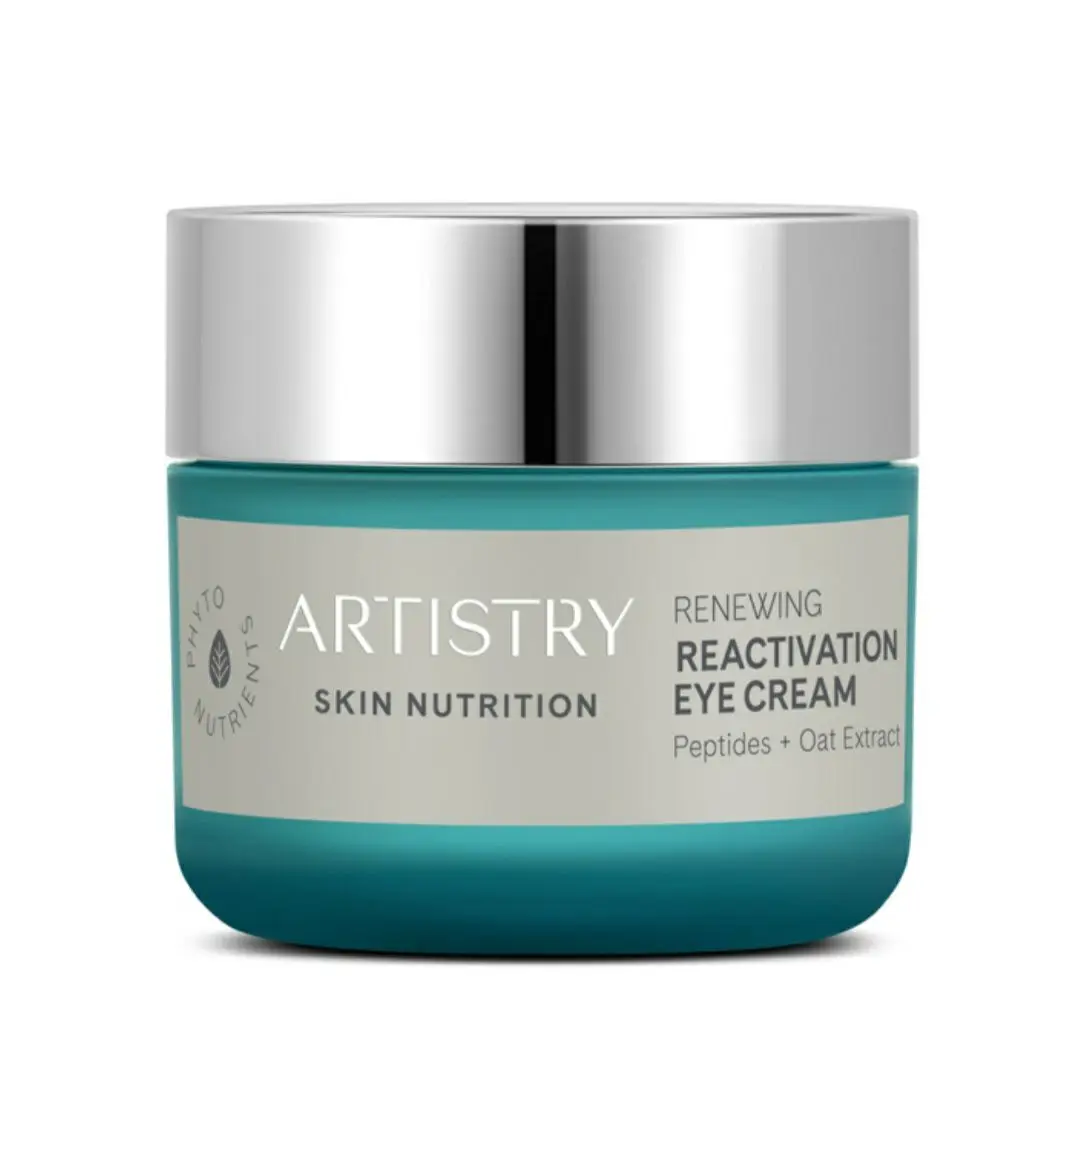 Artistry skin nutrition renewing reactivation eye cream